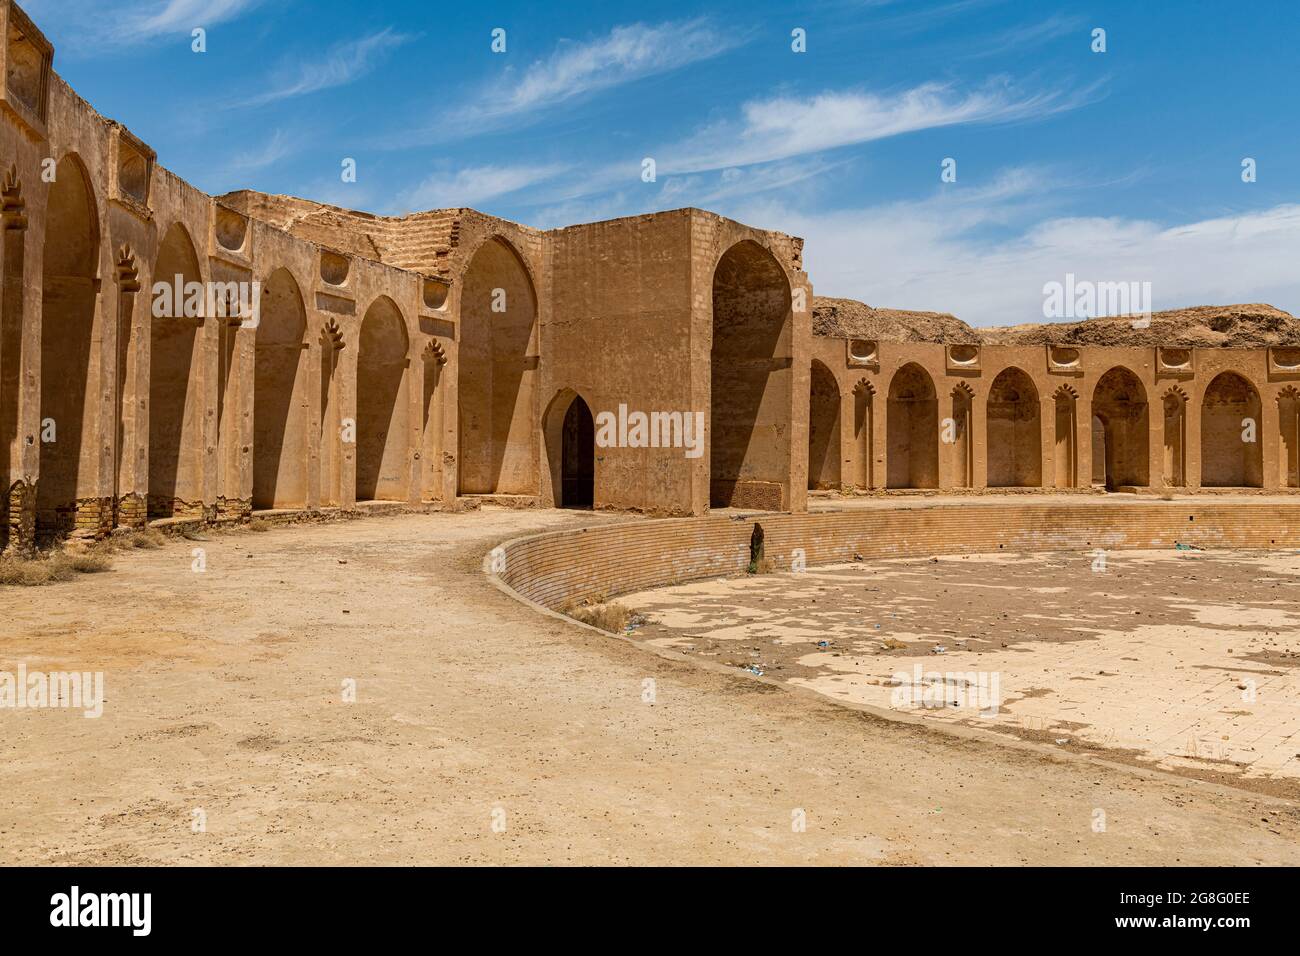 Calipha Palace, UNESCO World Heritage Site, Samarra, Iraq, Middle East Stock Photo